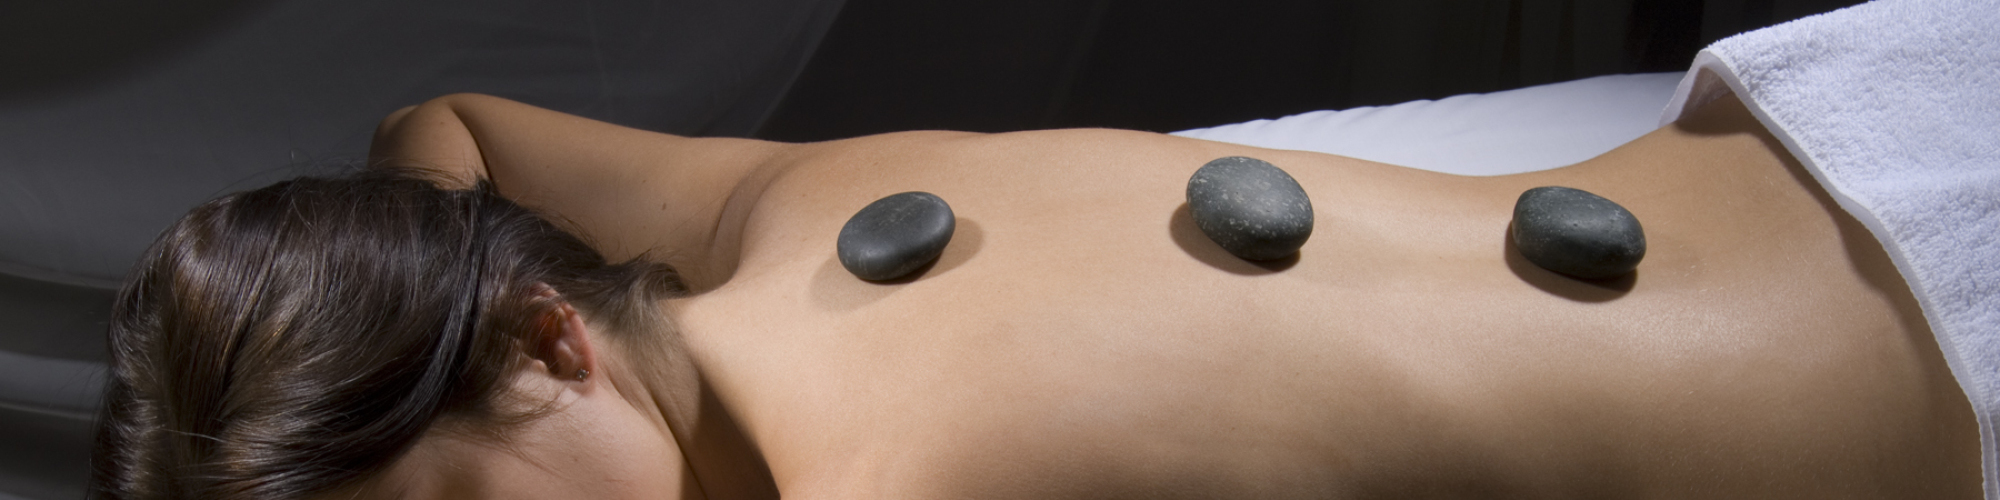 Massage, hot stones